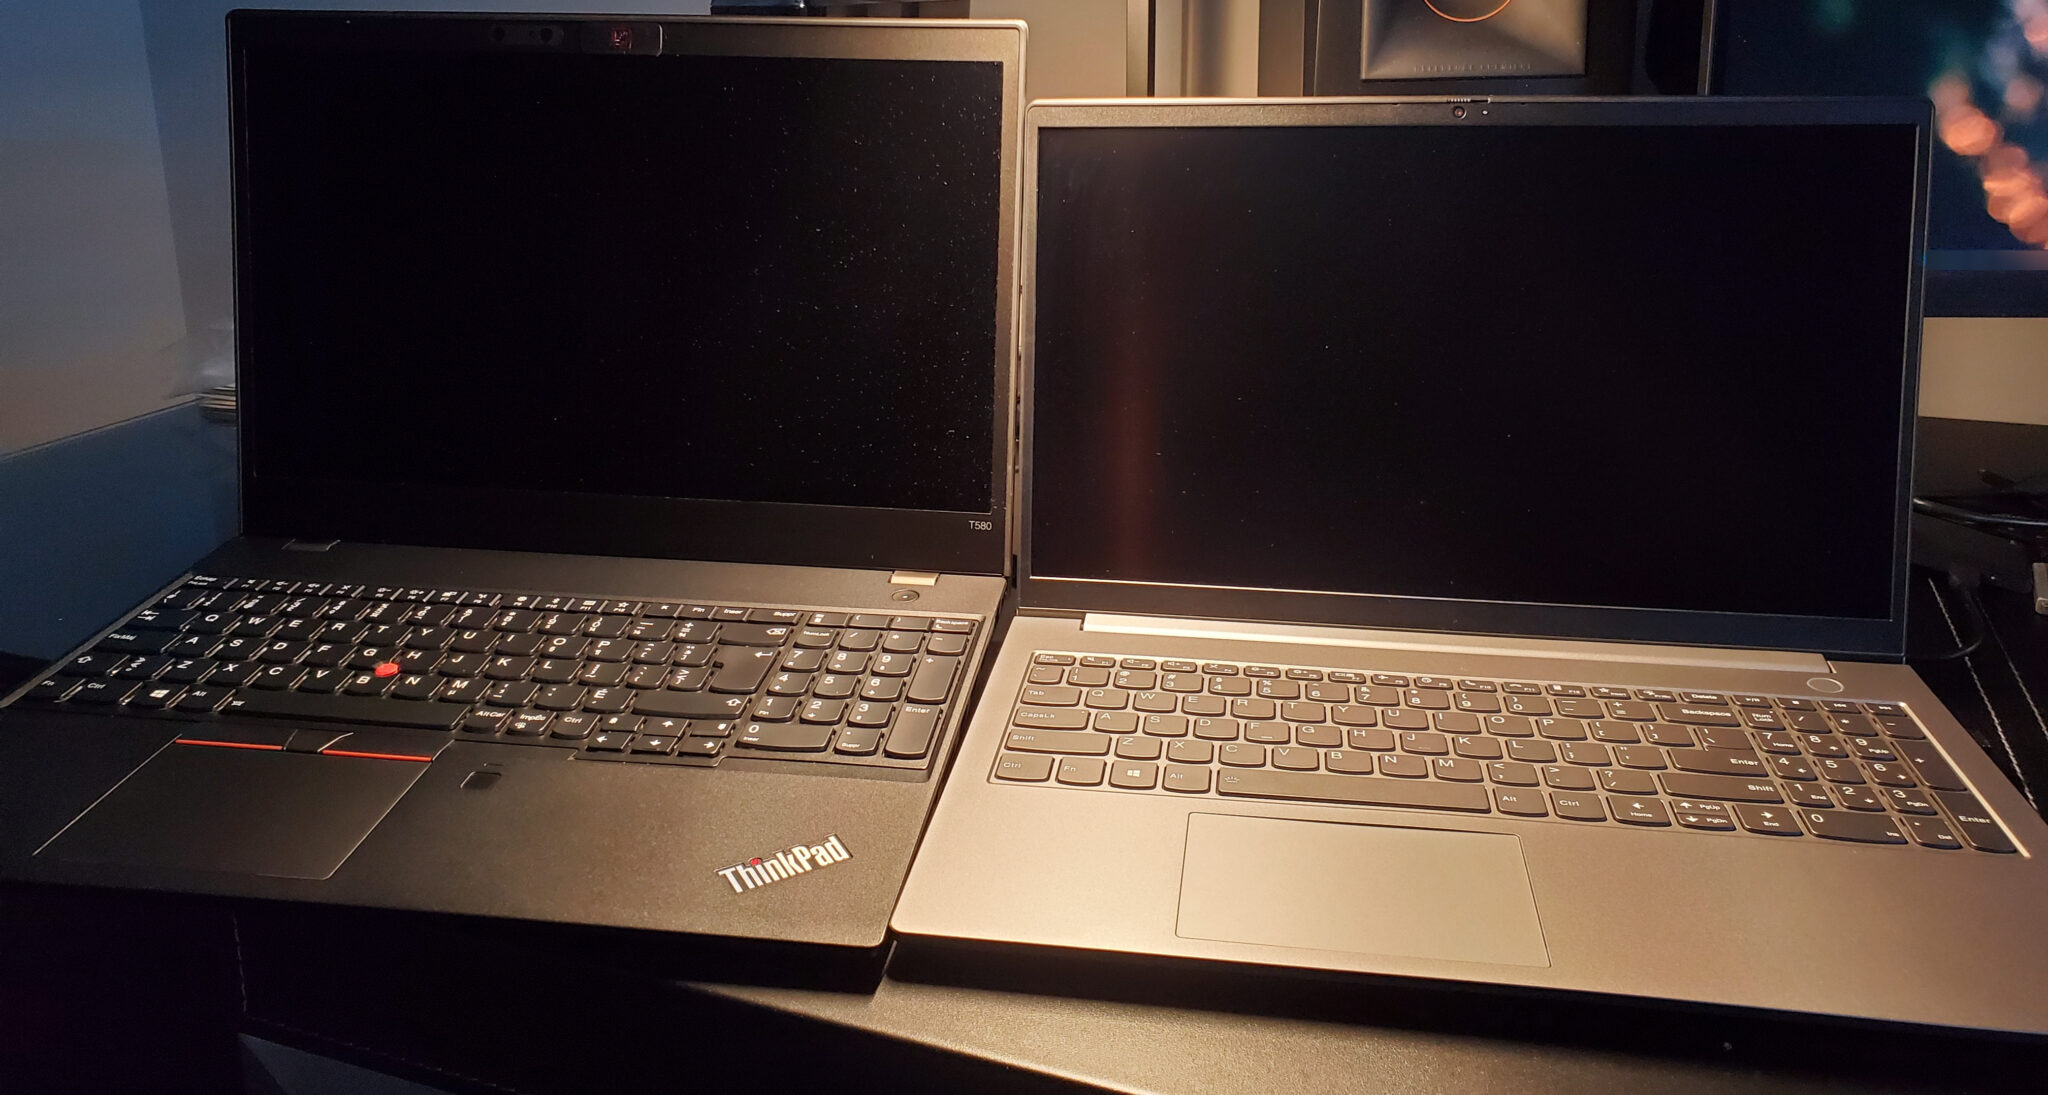 Lenovo T580 laptop (Intel) and Lenovo ThinkBook laptop (AMD)